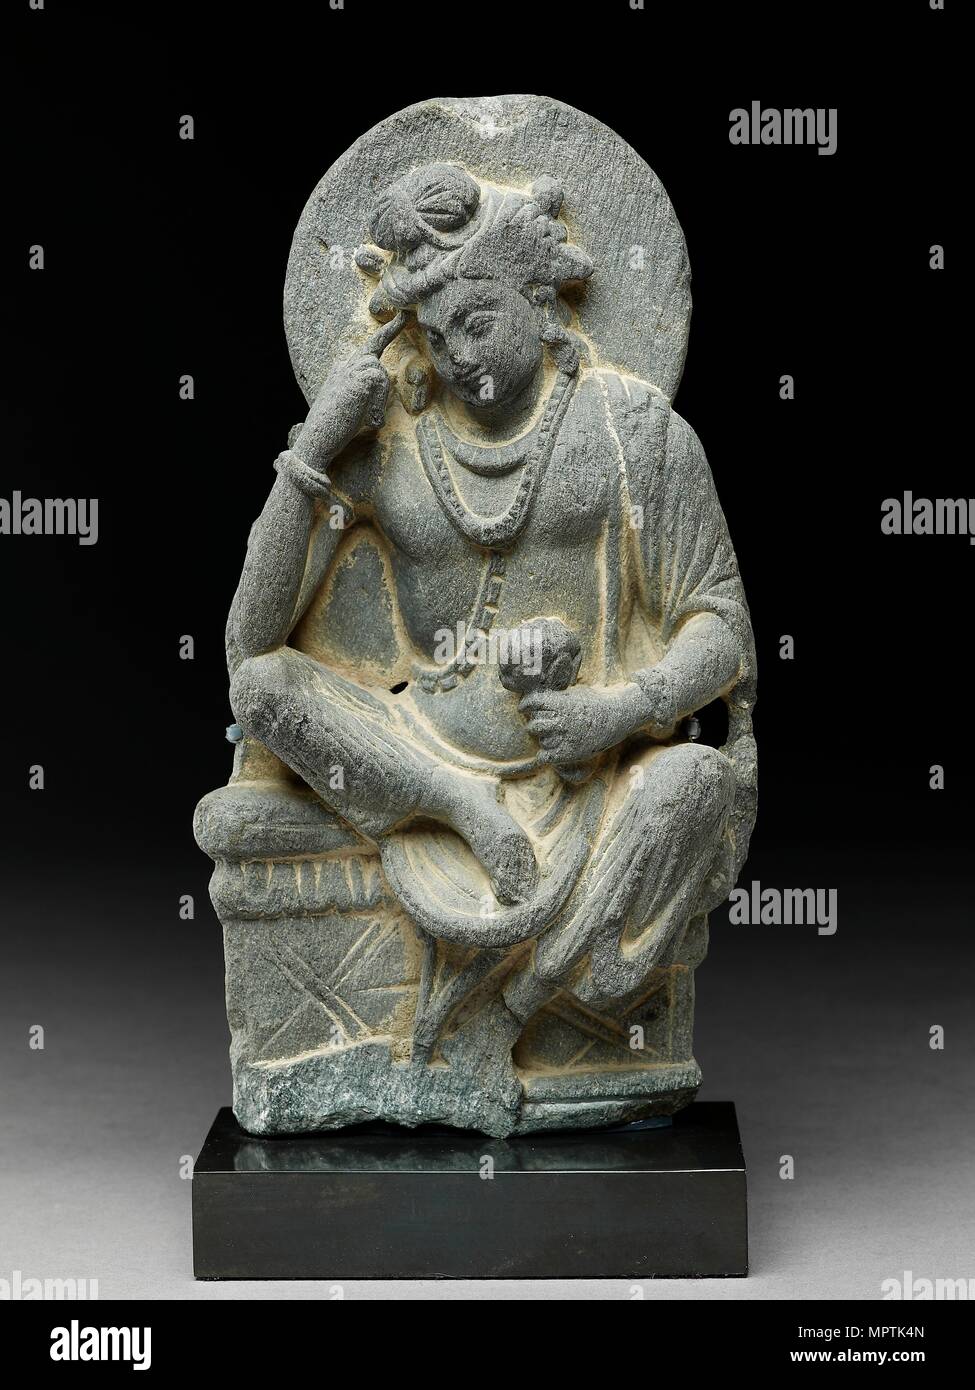 La figura di Avalokiteshvara in pensieroso pongono, 3° secolo. Artista: sconosciuto. Foto Stock